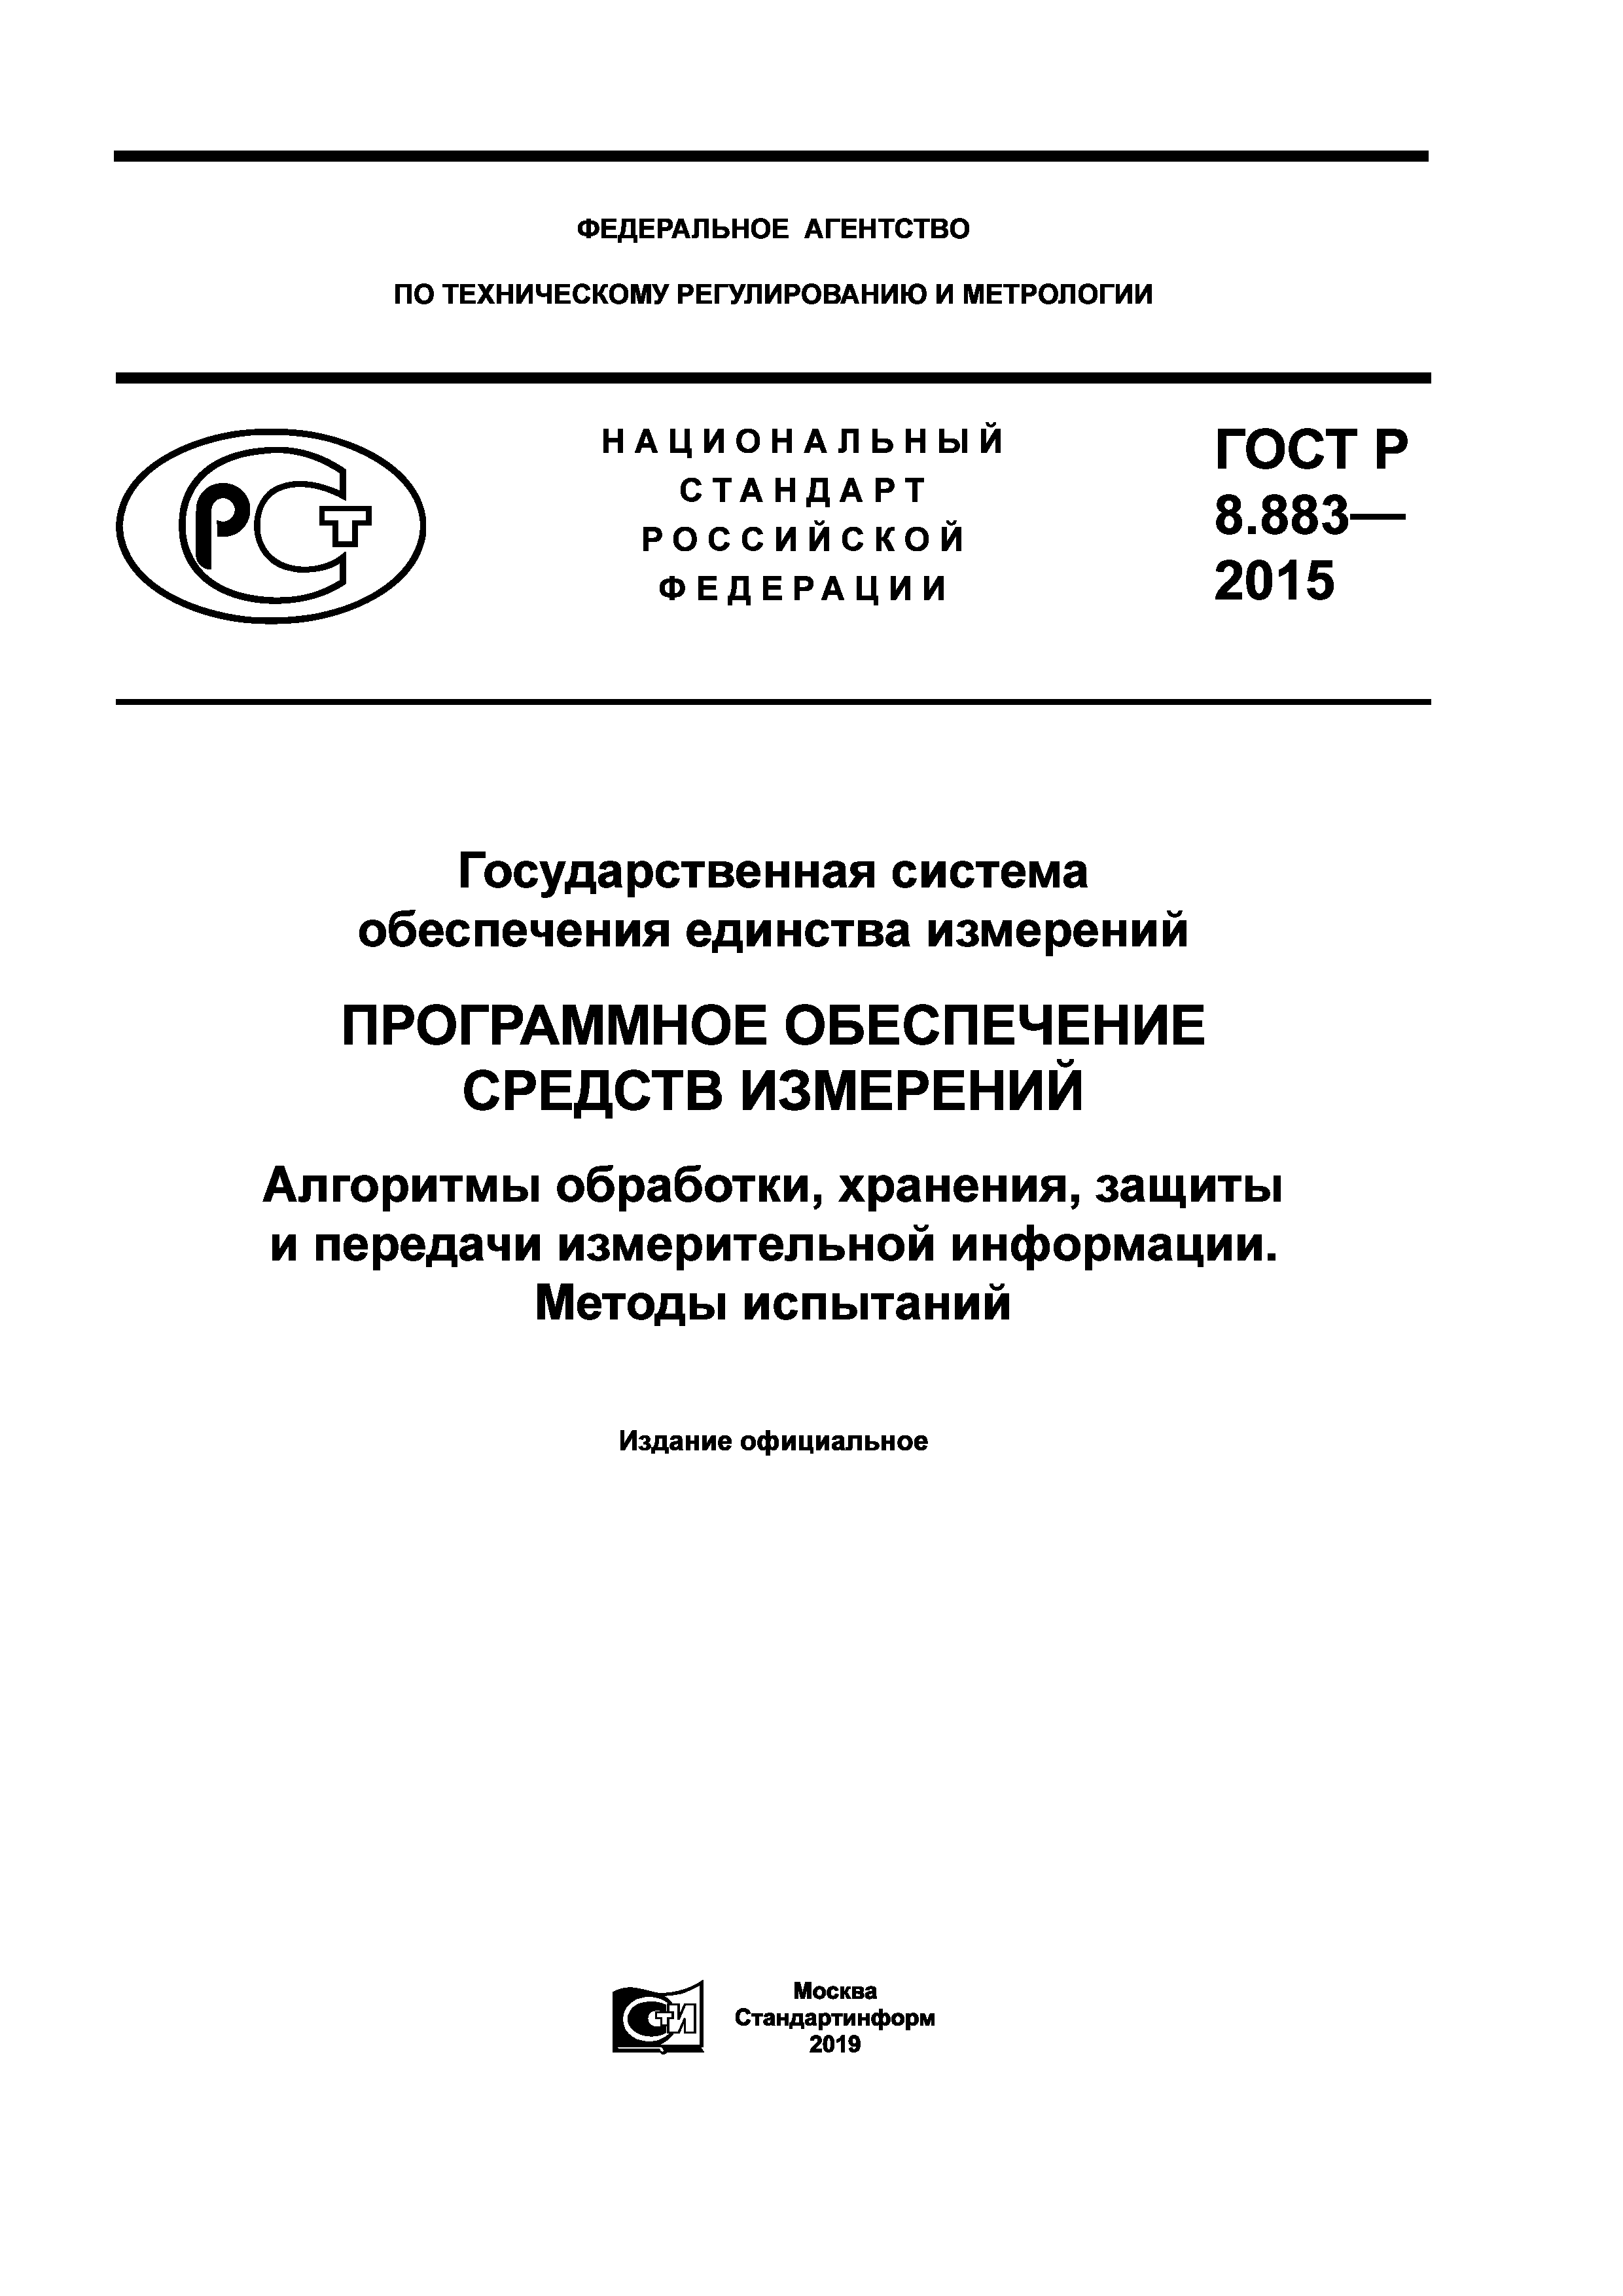 ГОСТ Р 8.883-2015